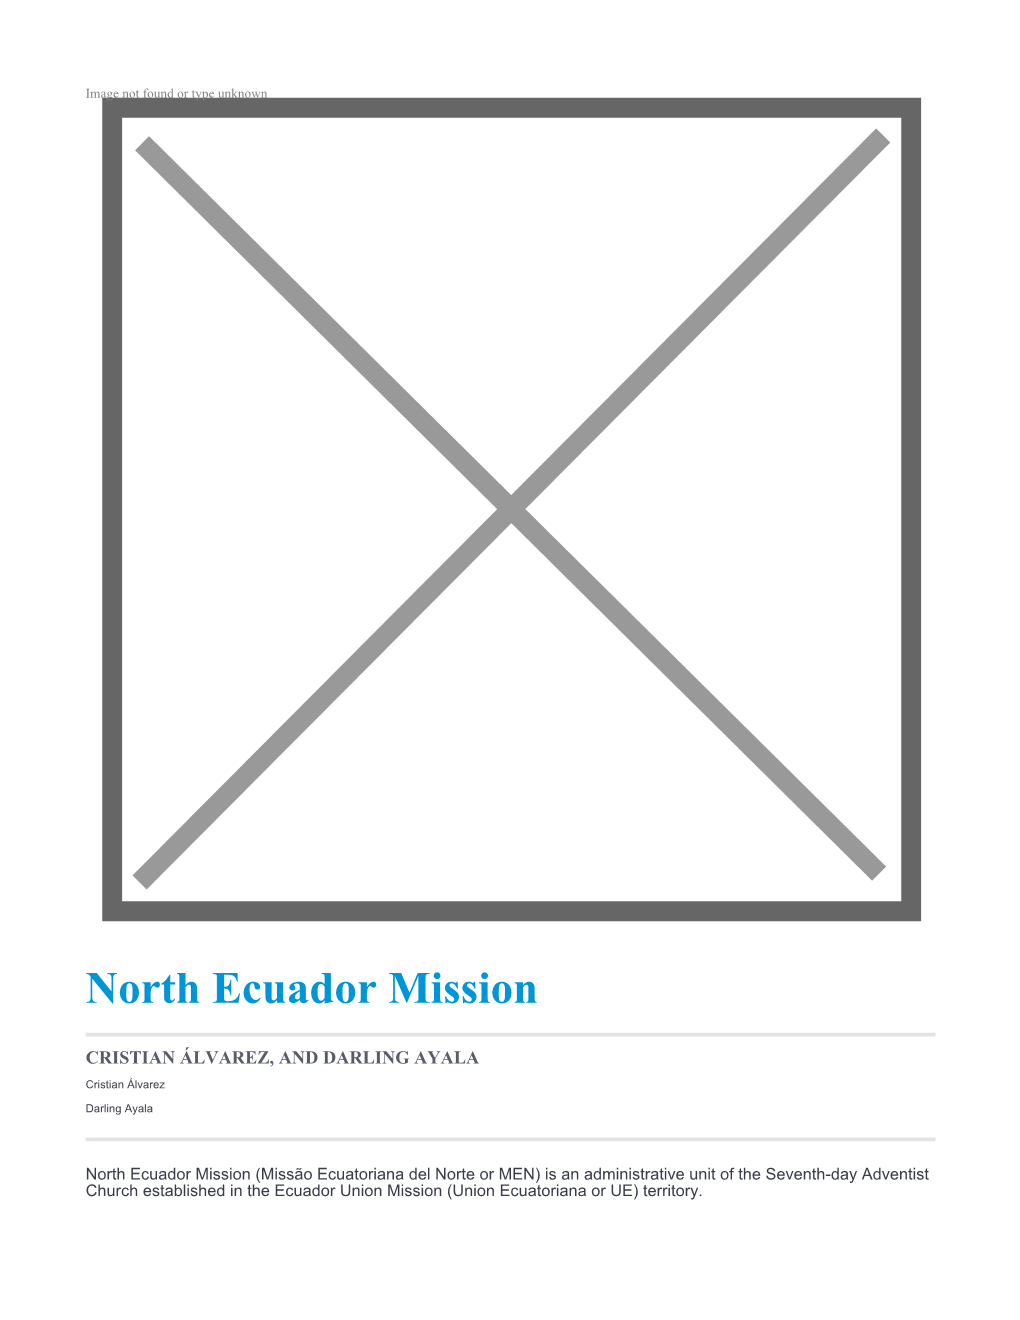 North Ecuador Mission